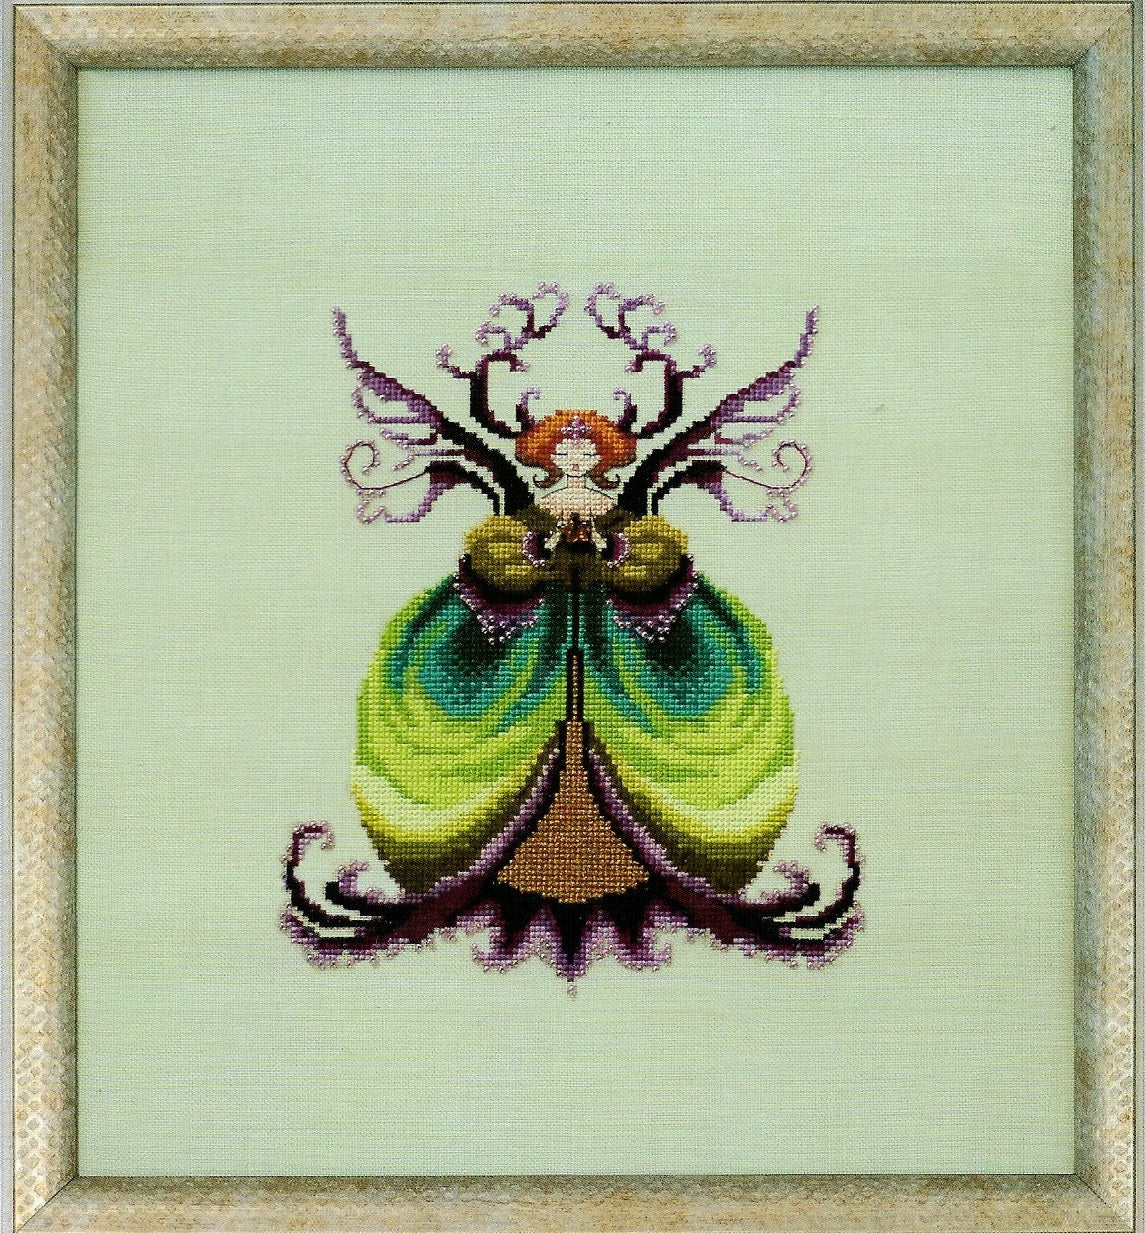 Nora Corbett June Bug NC310 cross stitch pattern